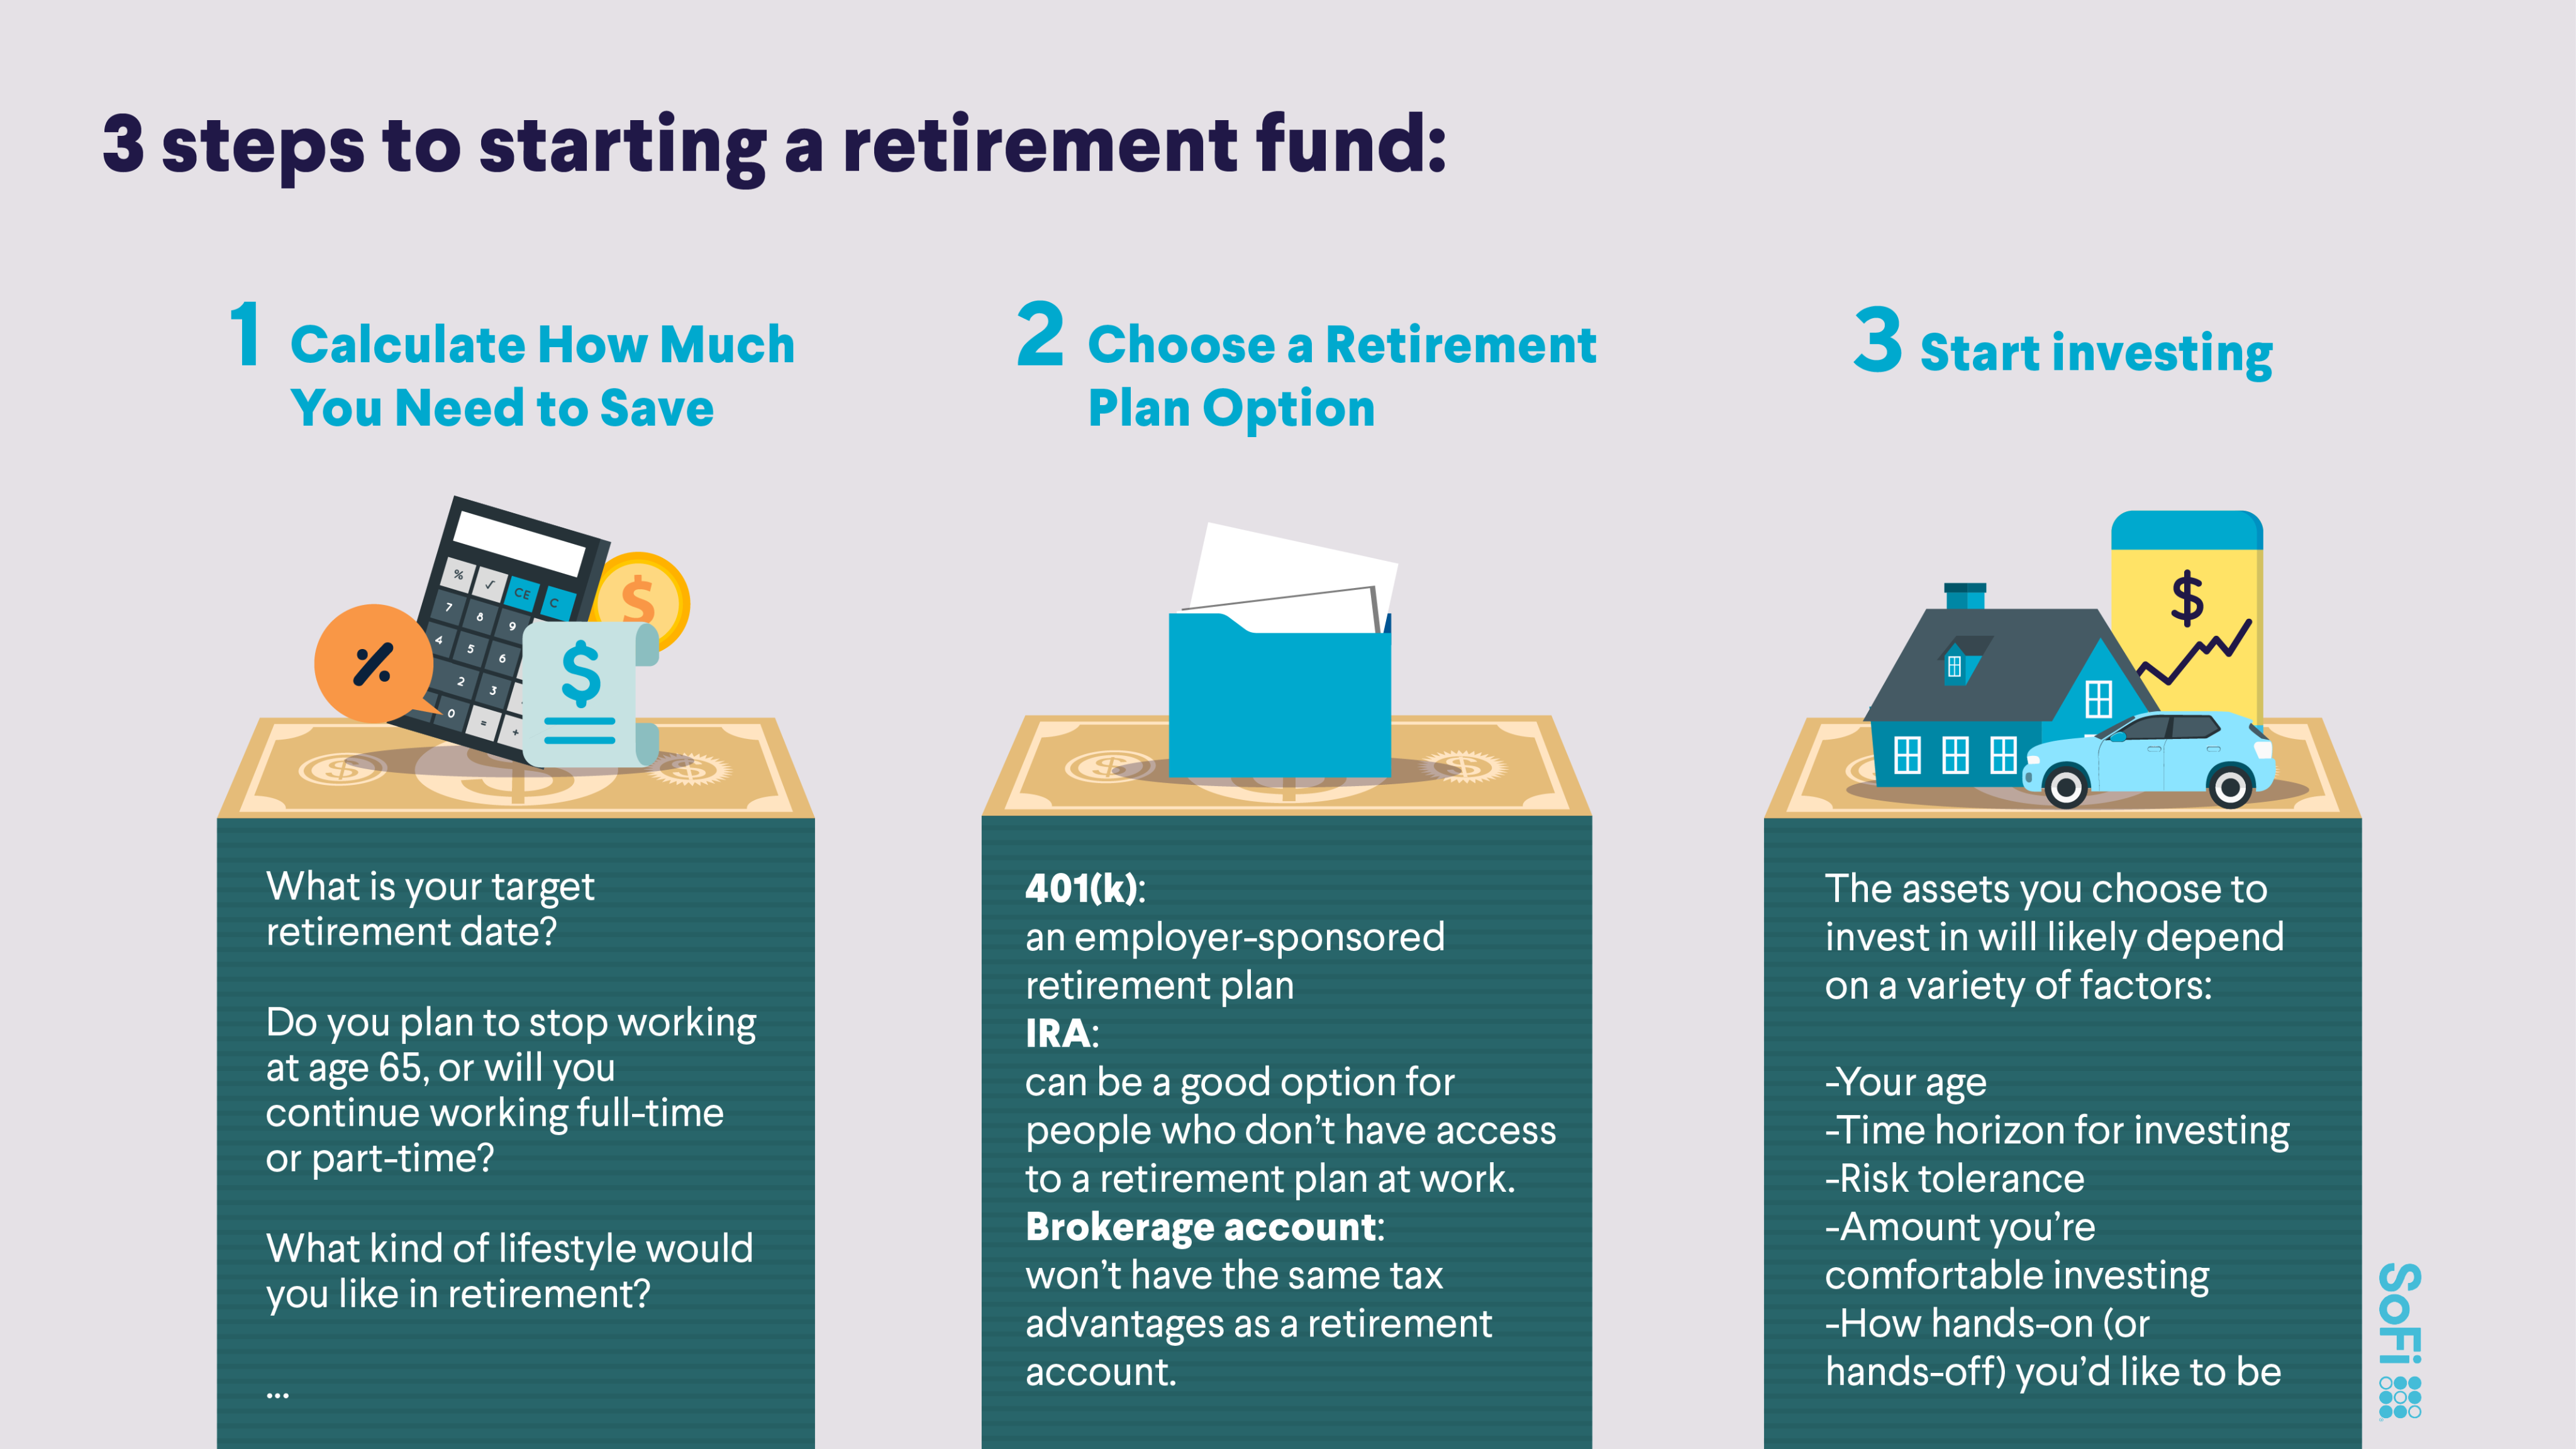 Retirement funds